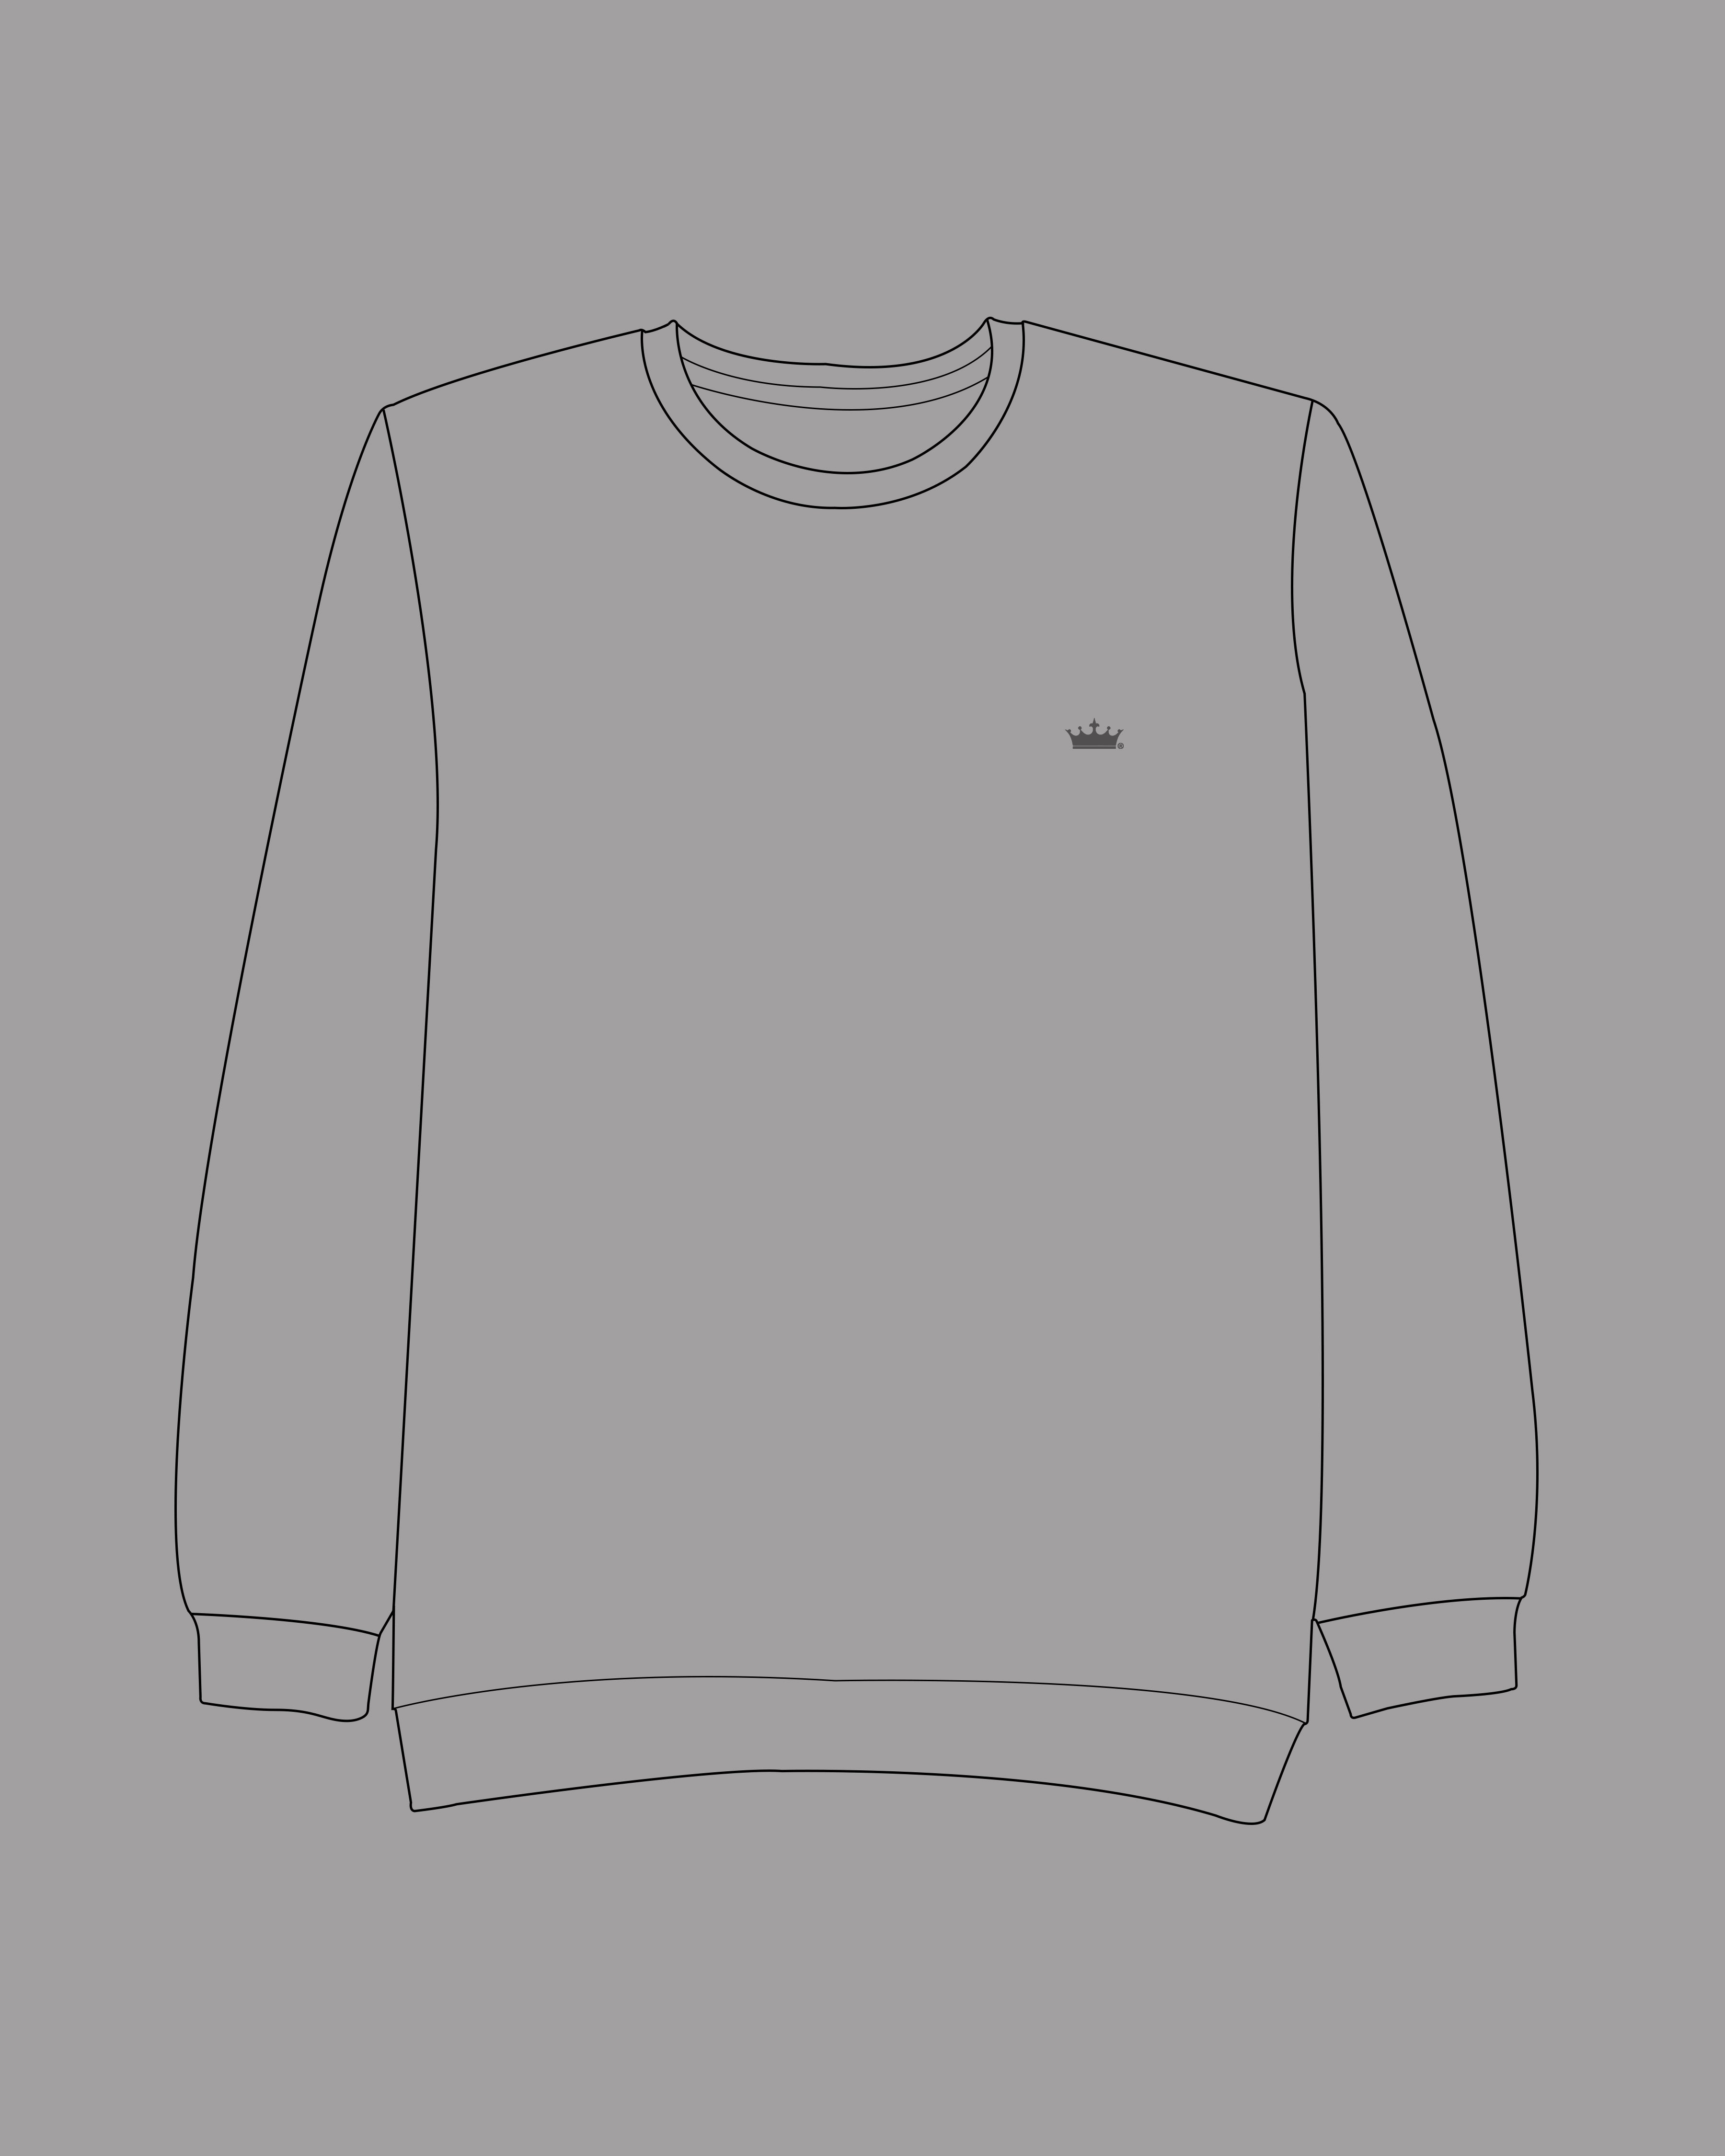 Jade Black with Saffron and White Block Pattern Premium Interlock Cotton Fabric Sweatshirt